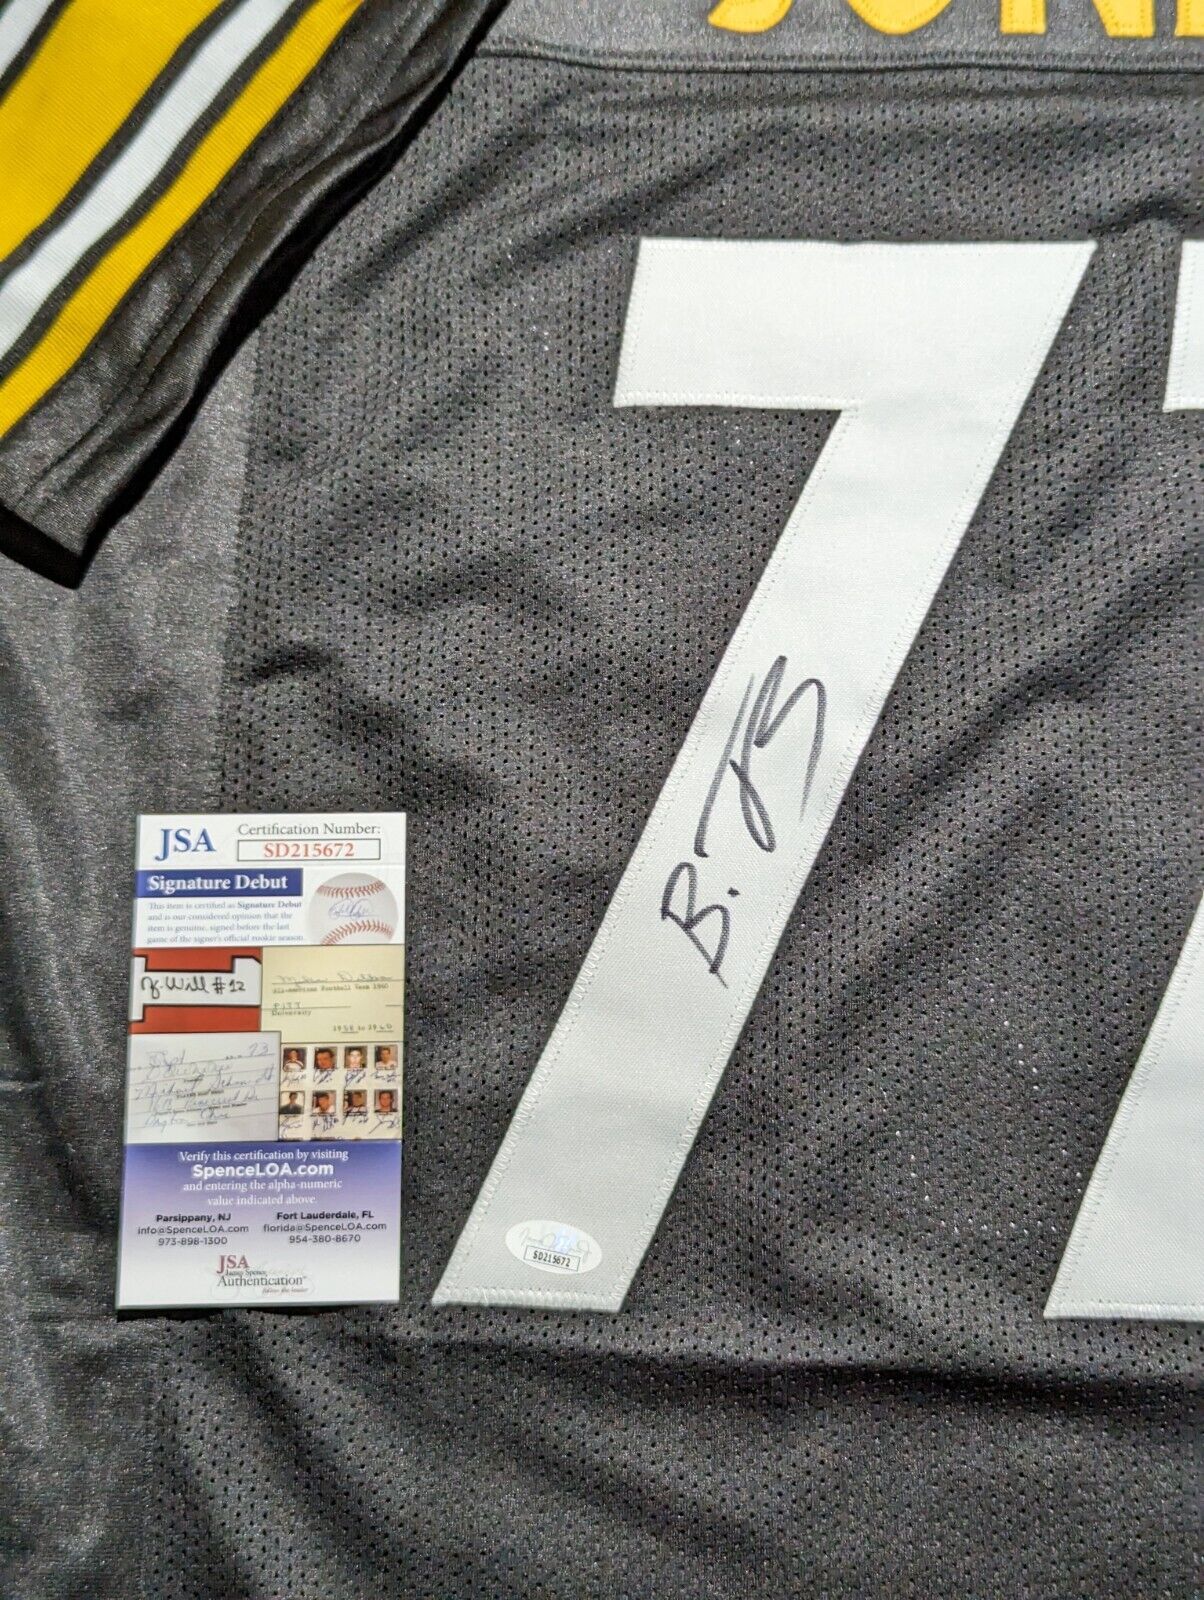 MVP Authentics Pittsburgh Steelers Broderick Jones Autographed Signed Jersey Jsa Coa 90 sports jersey framing , jersey framing